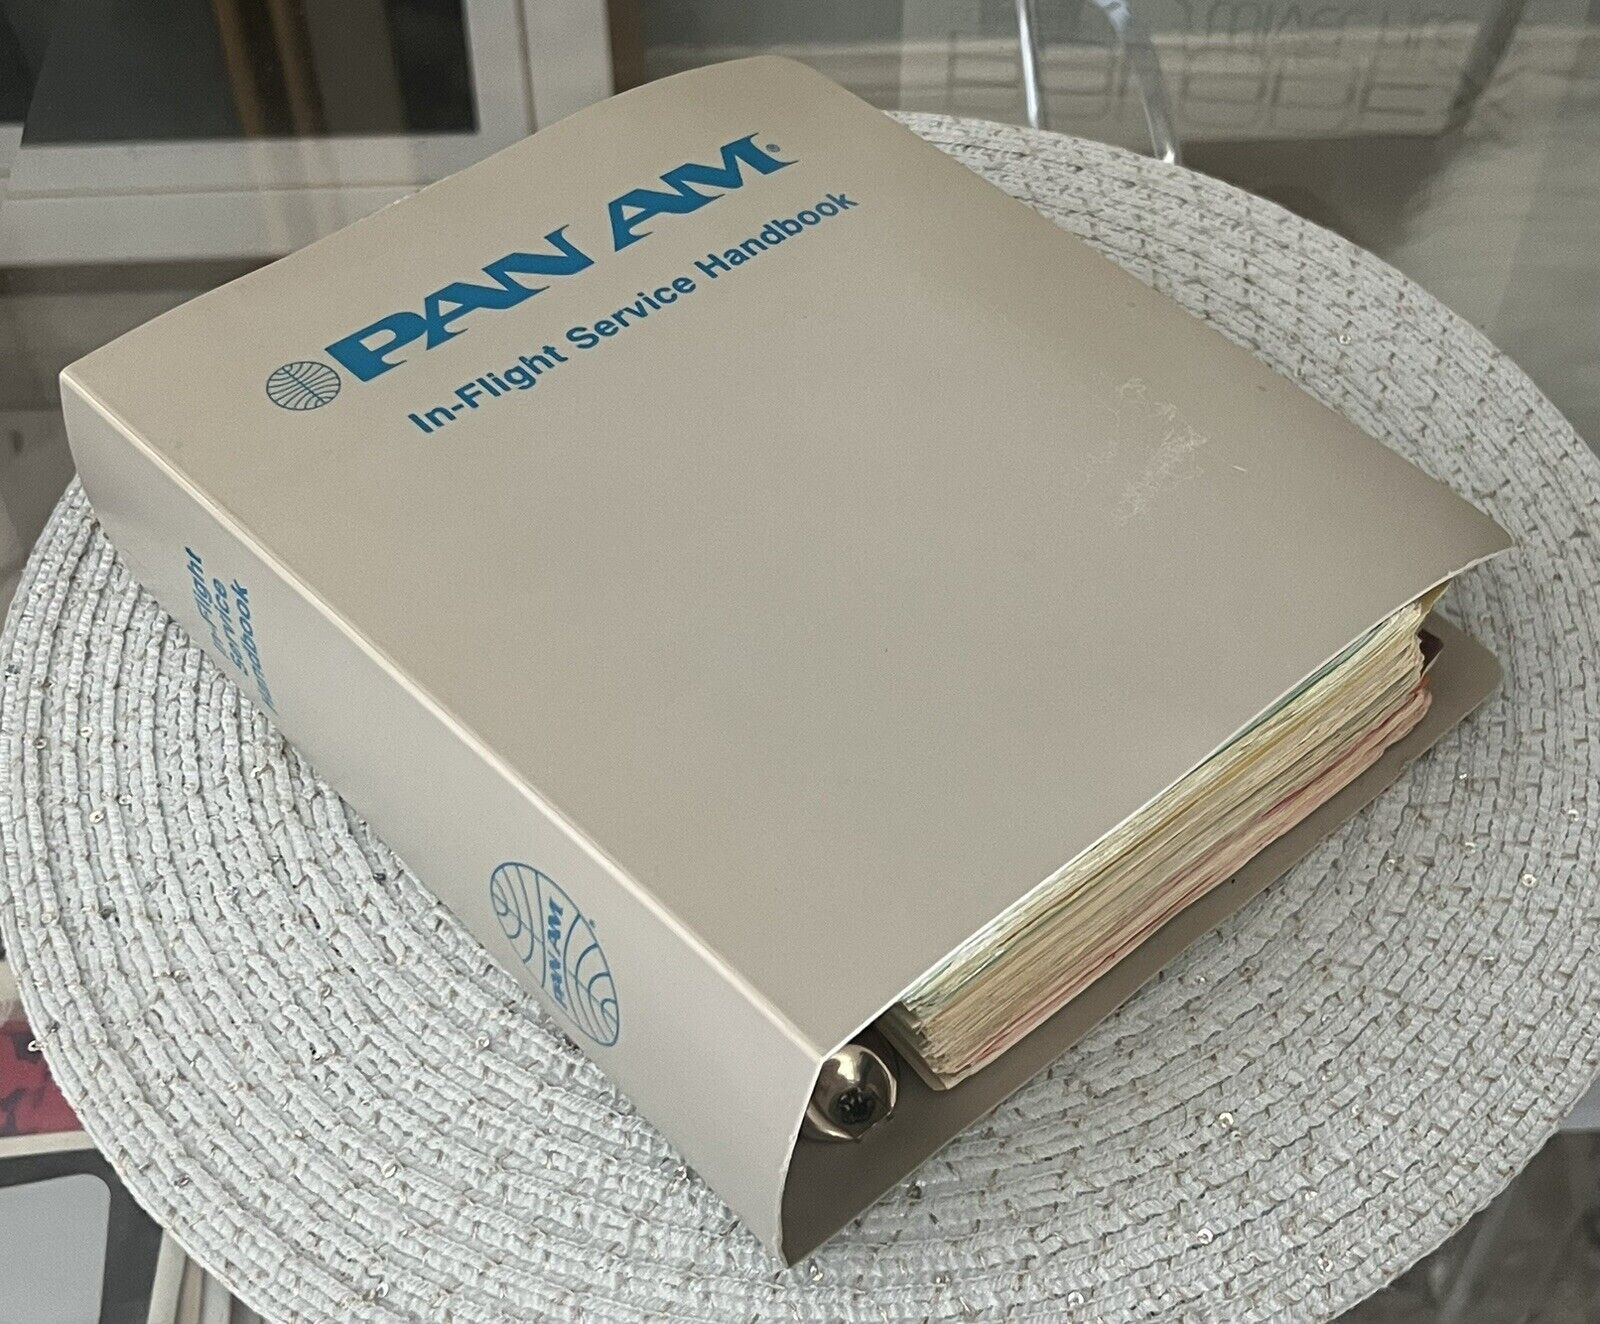 Pan Am Airlines In-Flight Services Handbook 1980’s